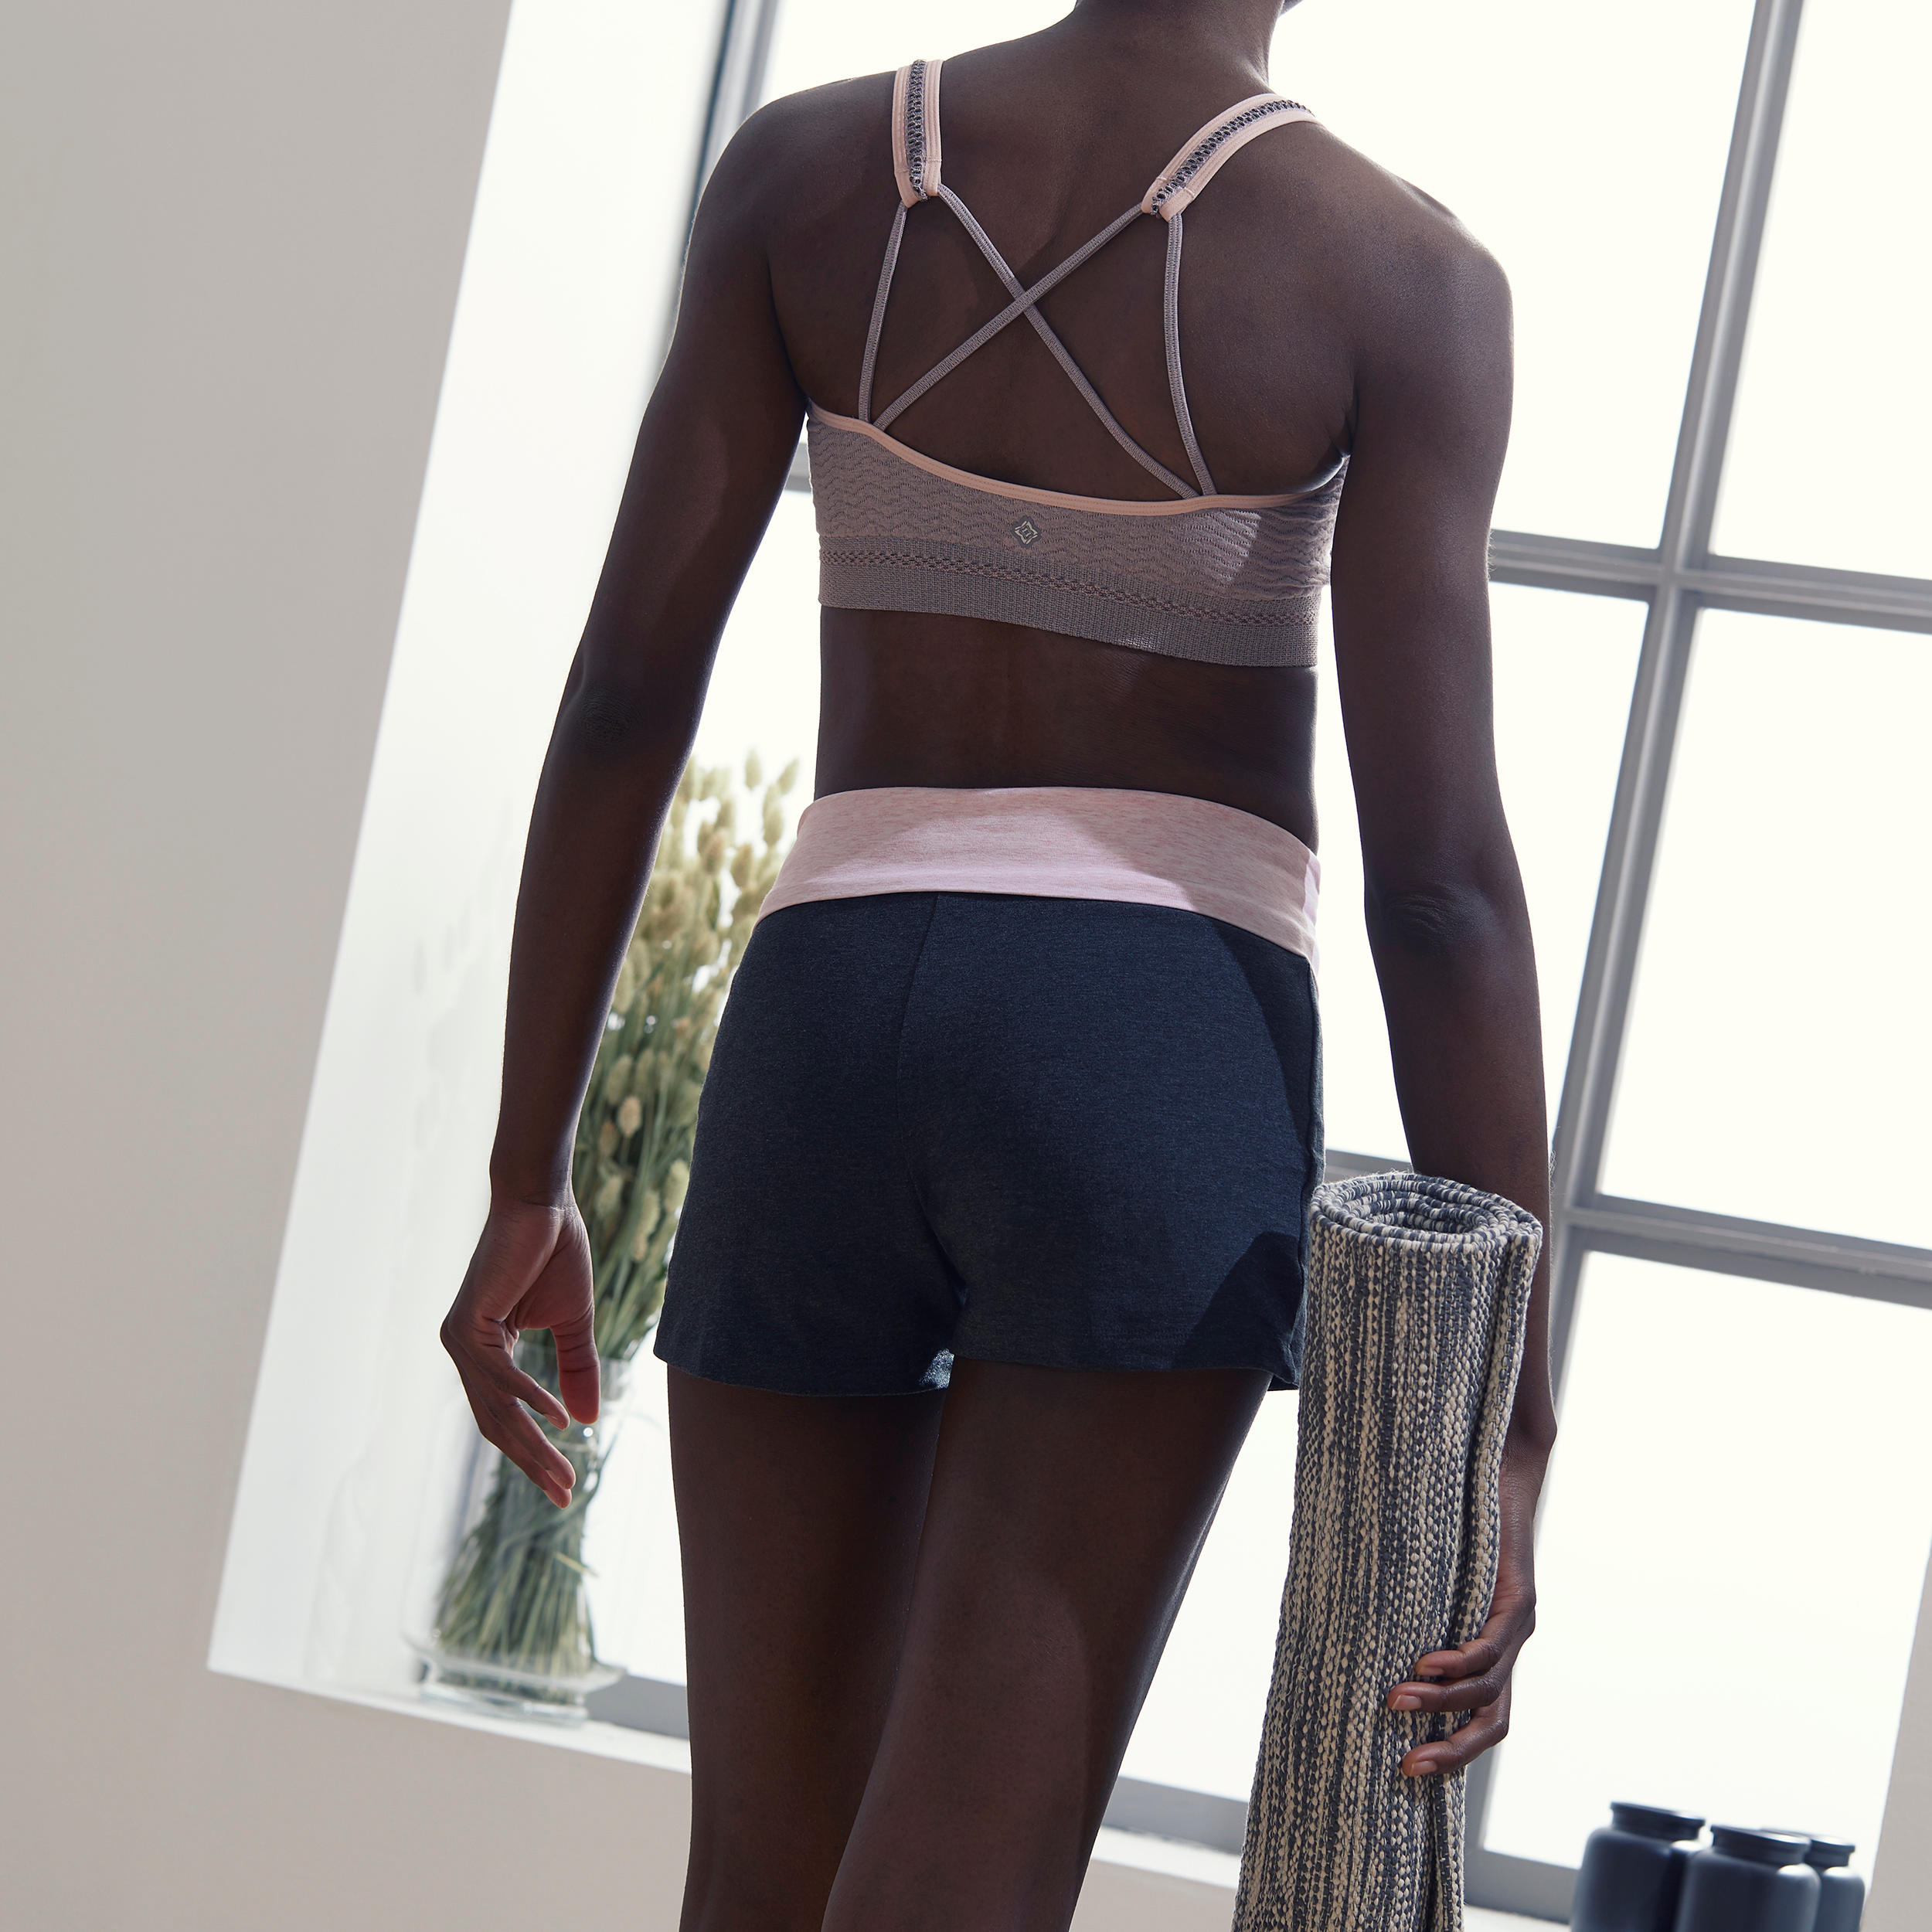 Women's Cotton Yoga Shorts - Grey/Pink 7/9